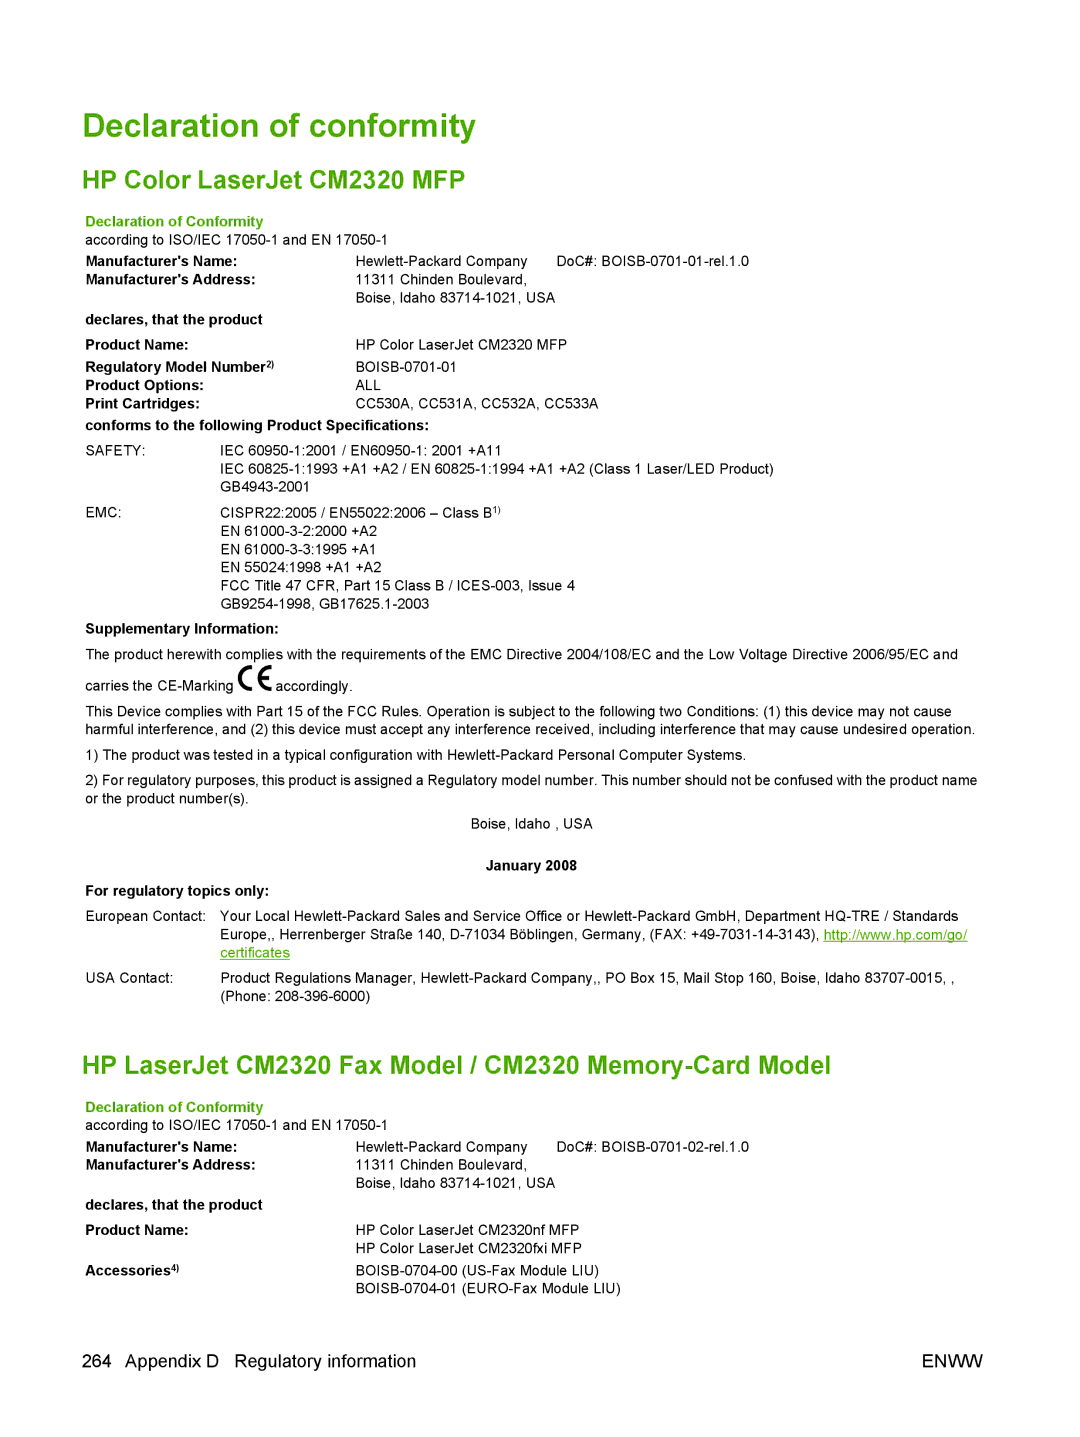 HP Declaration of conformity, HP Color LaserJet CM2320 MFP, HP LaserJet CM2320 Fax Model / CM2320 Memory-Card Model 